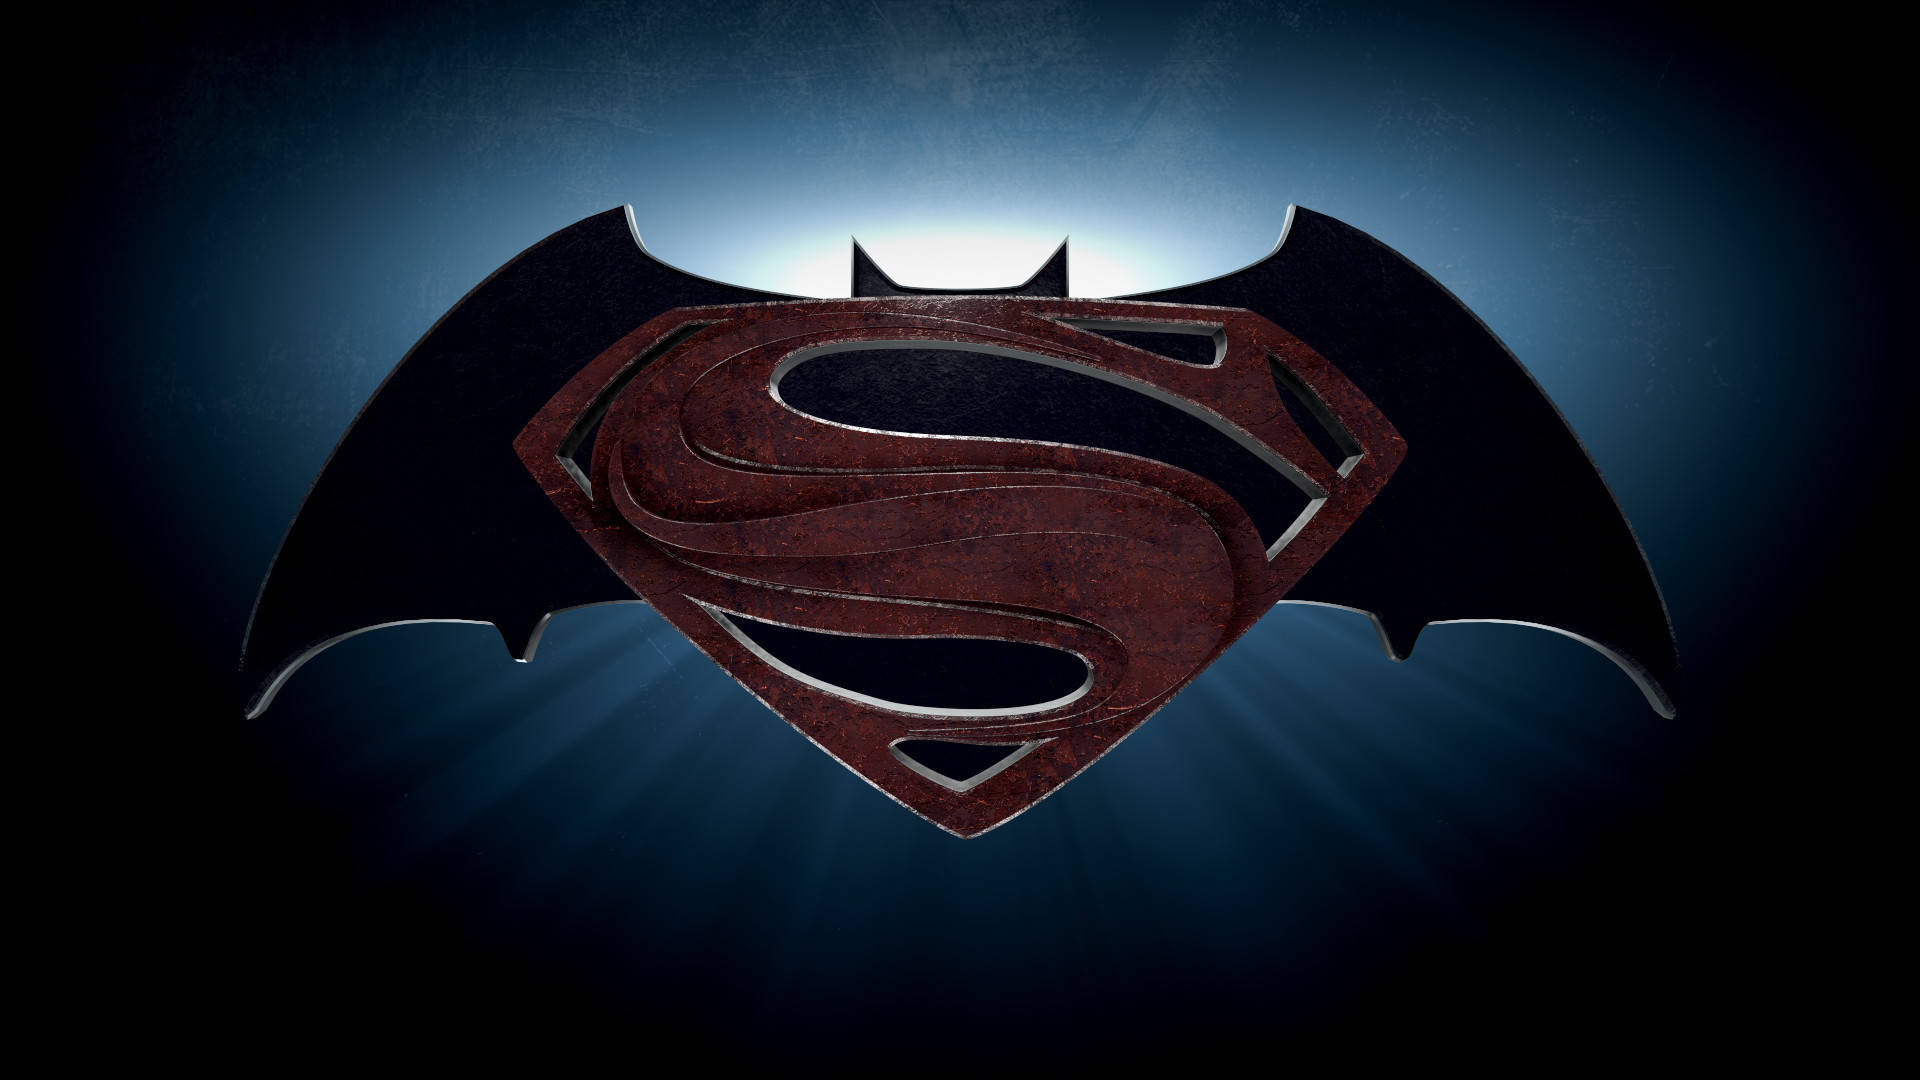 Batman Vs Superman Symbol Iphone Background